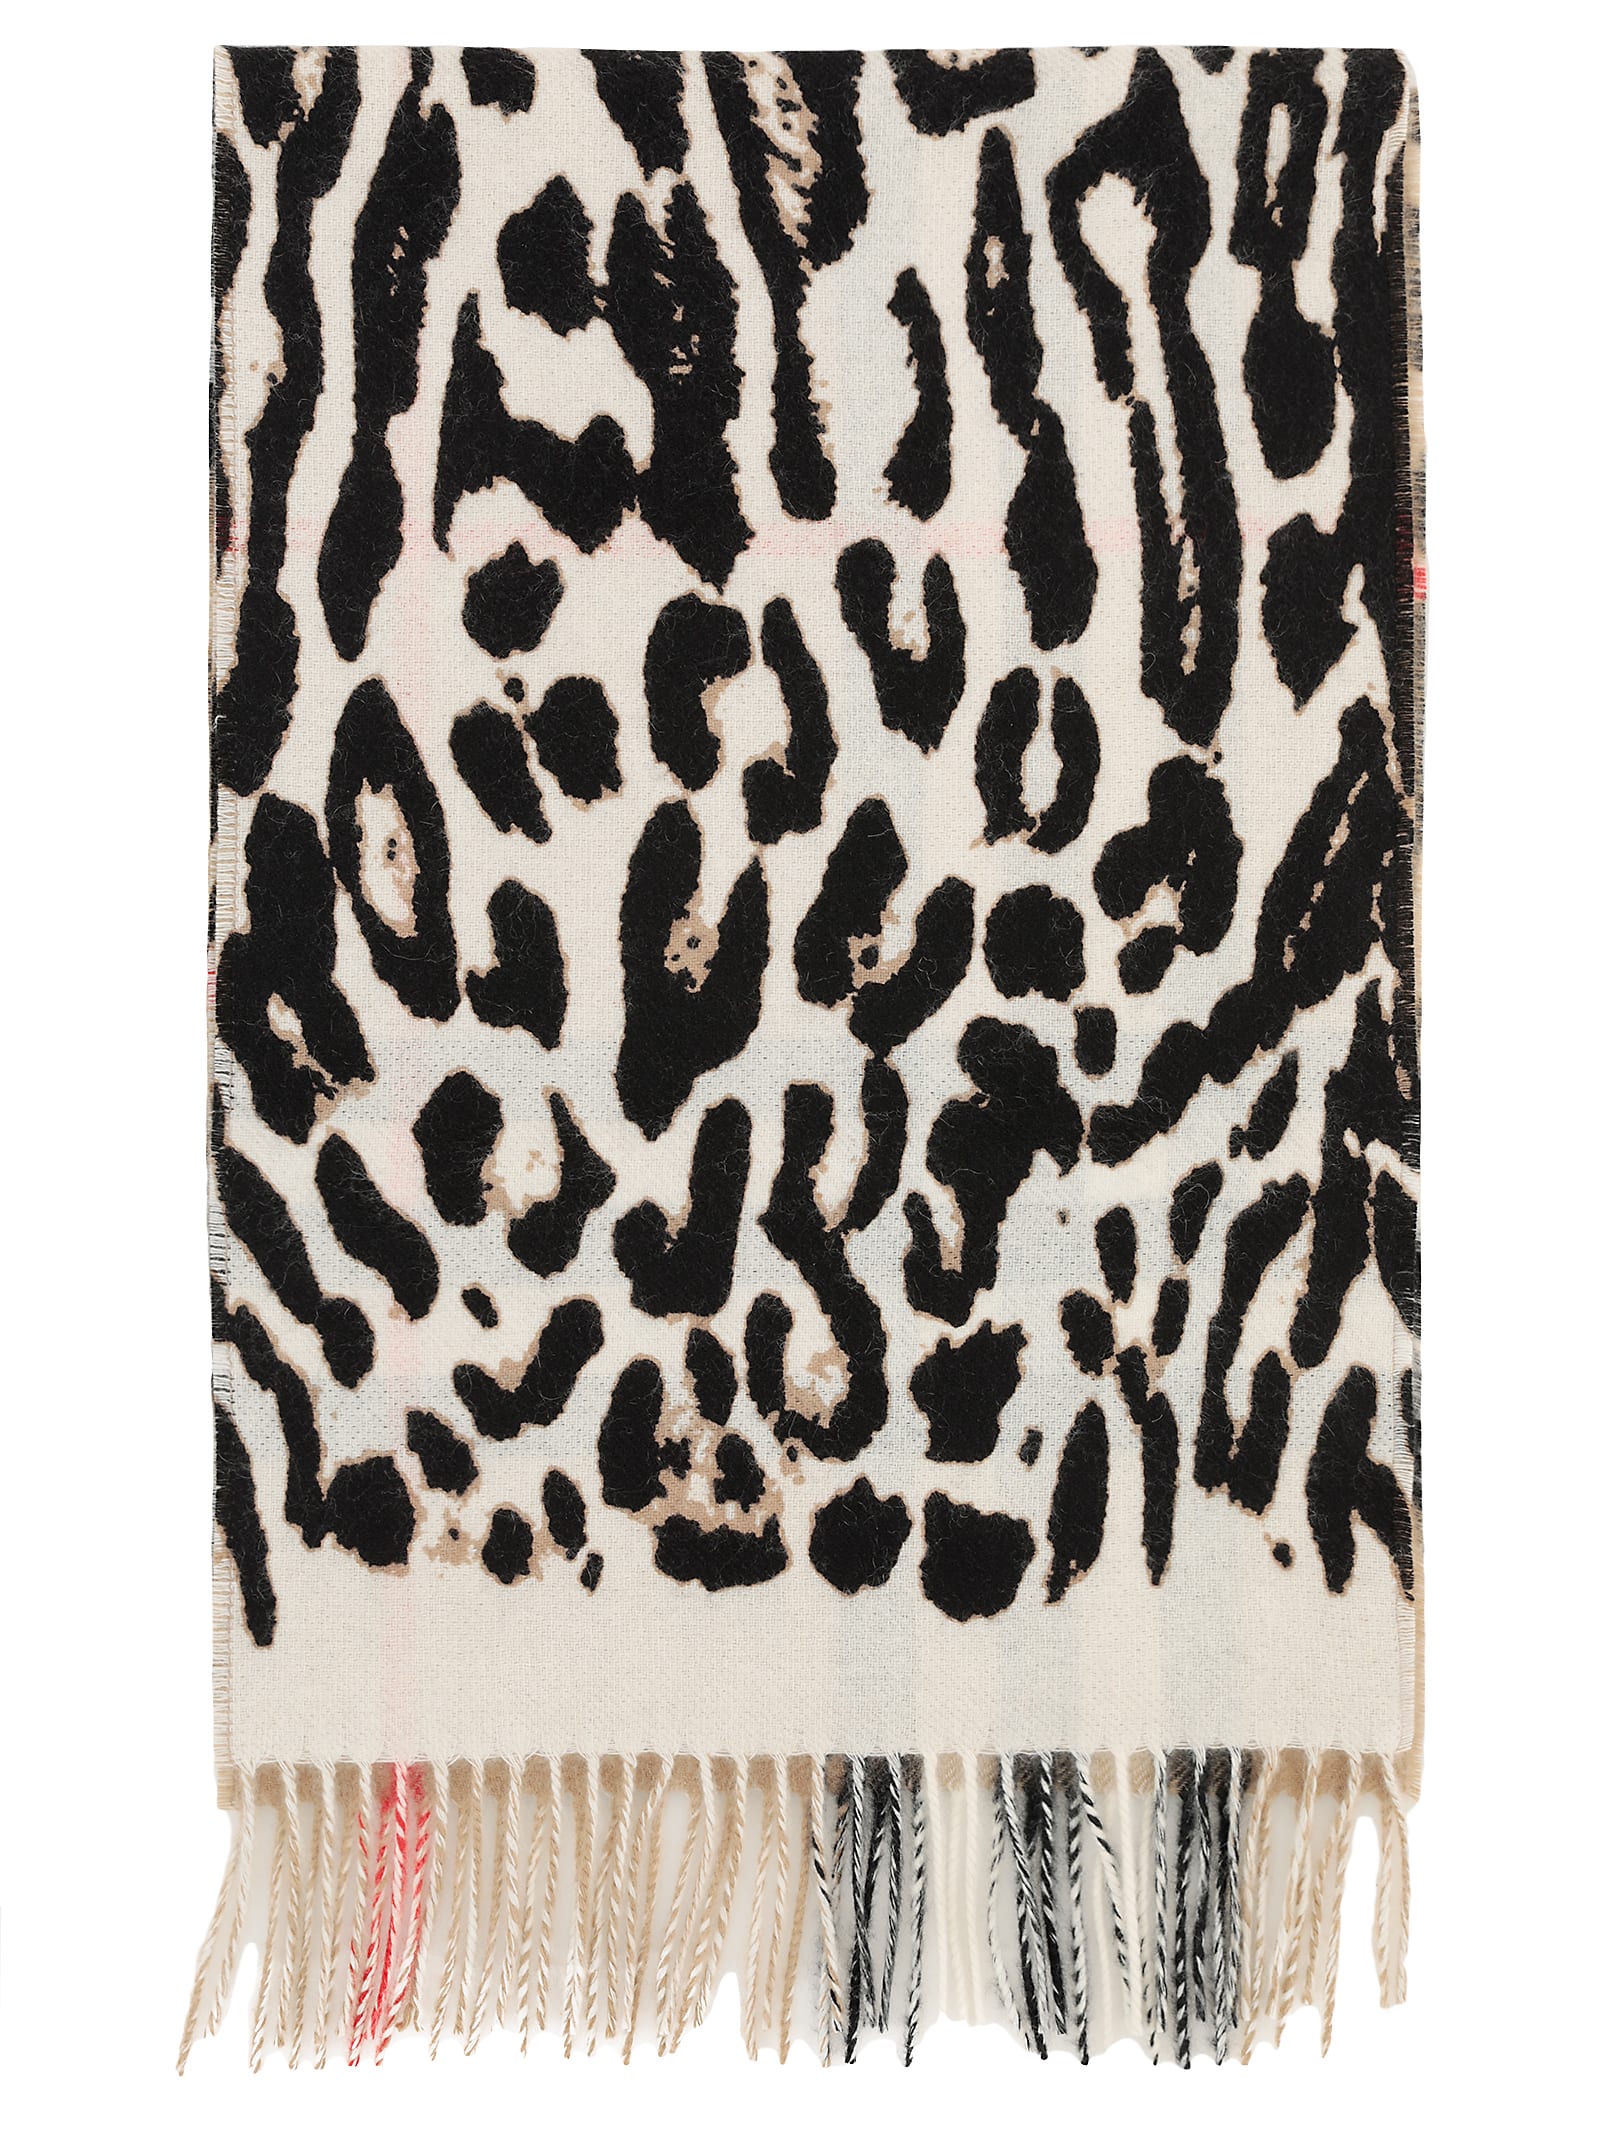 burberry leopard scarf